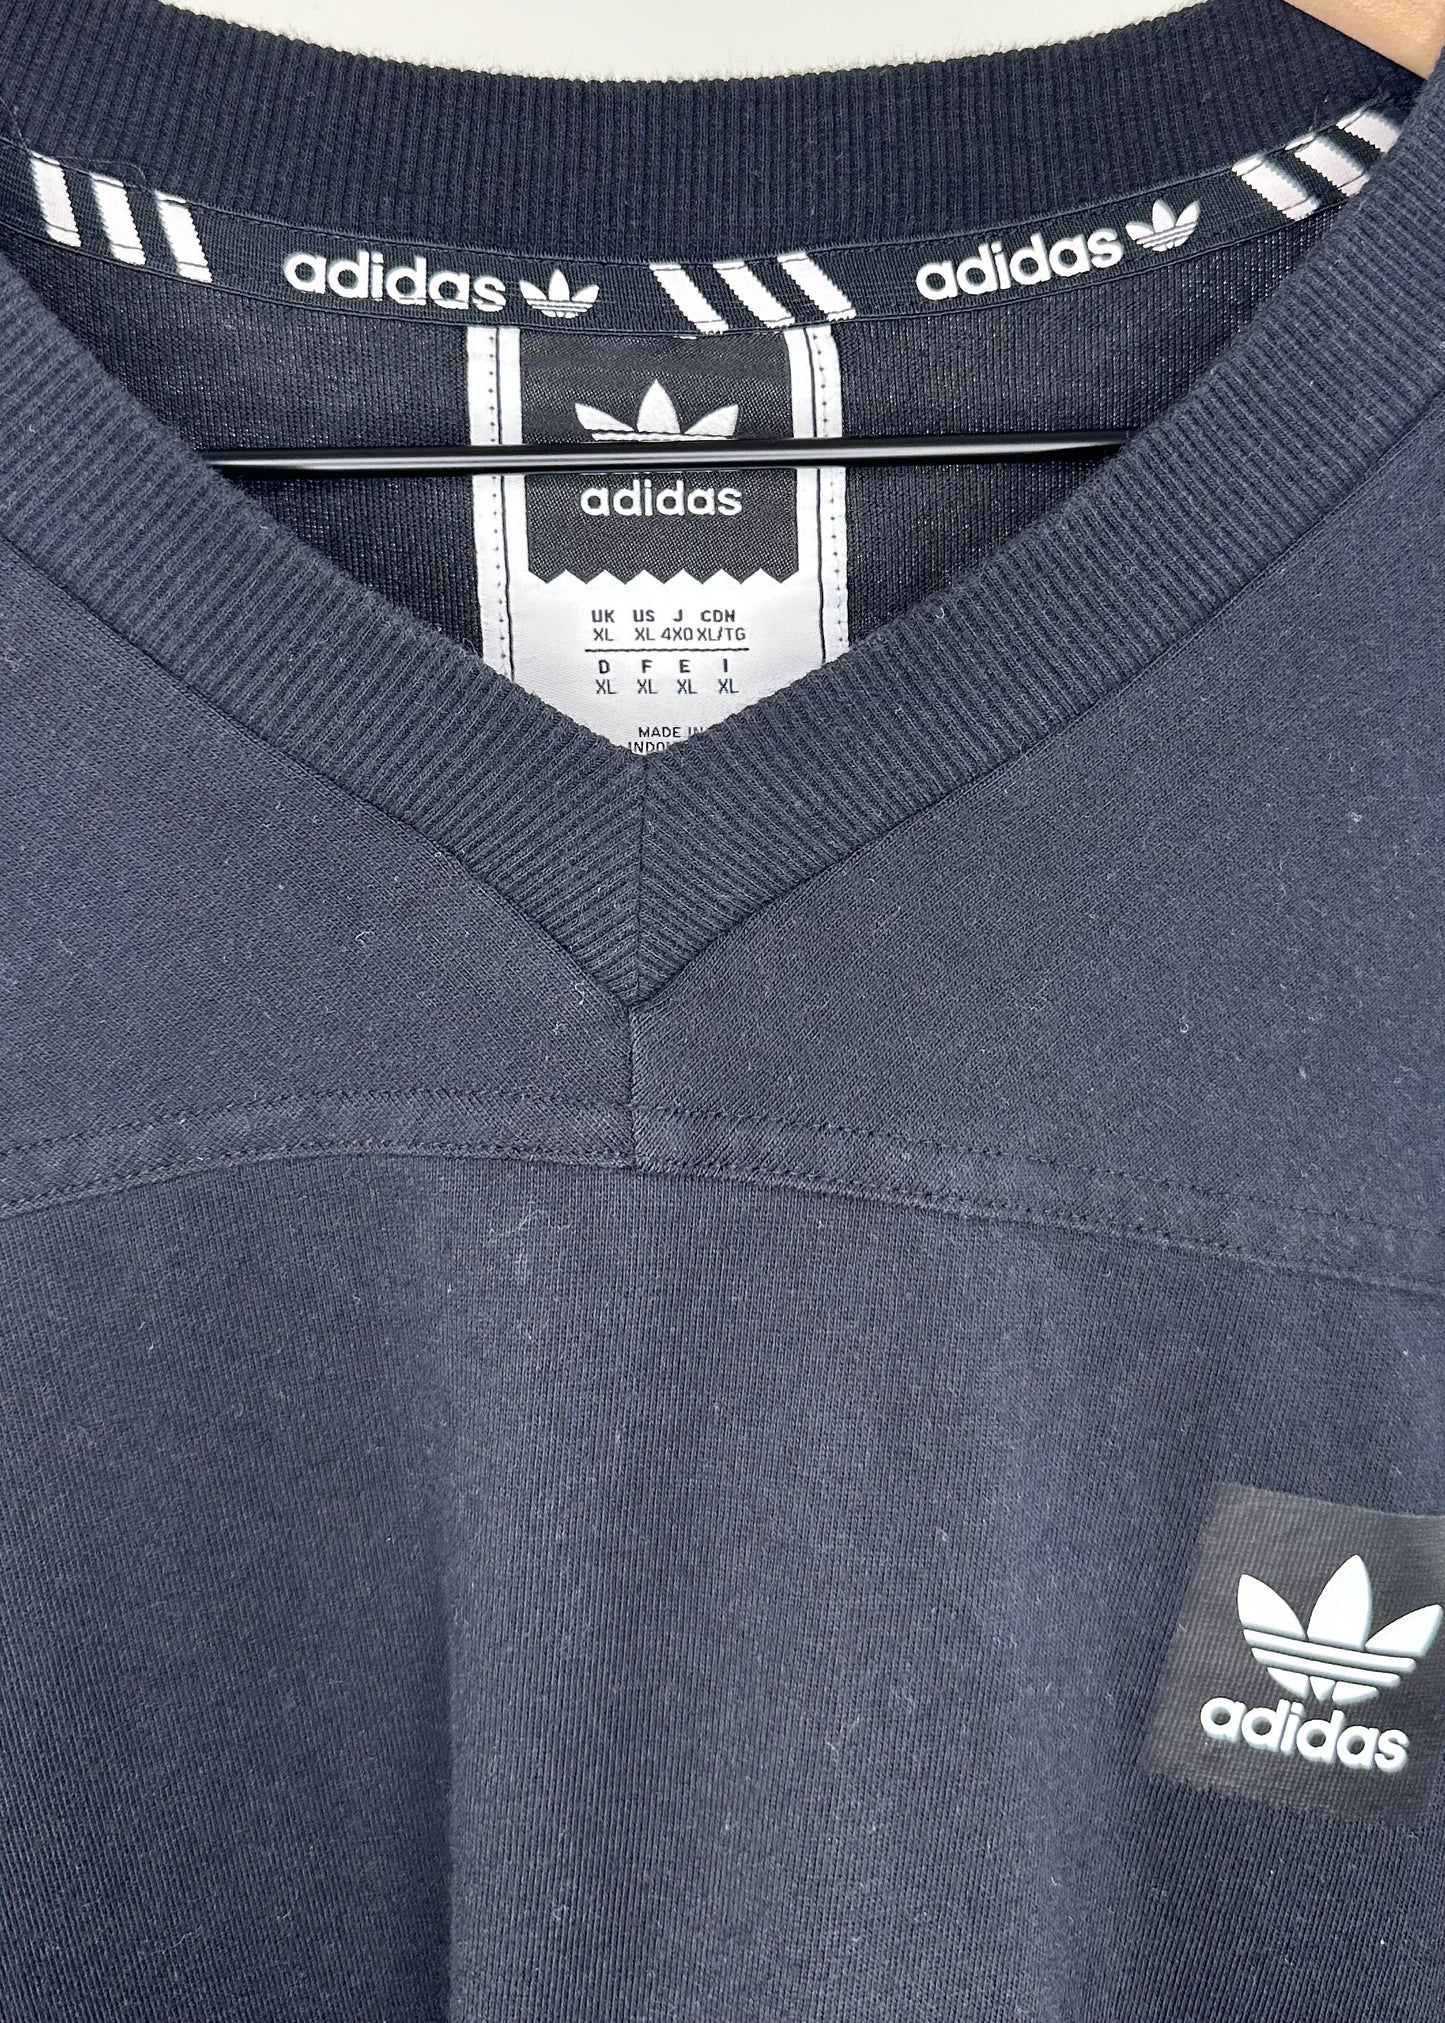 Black Long Sleeve Shirt By Adidas